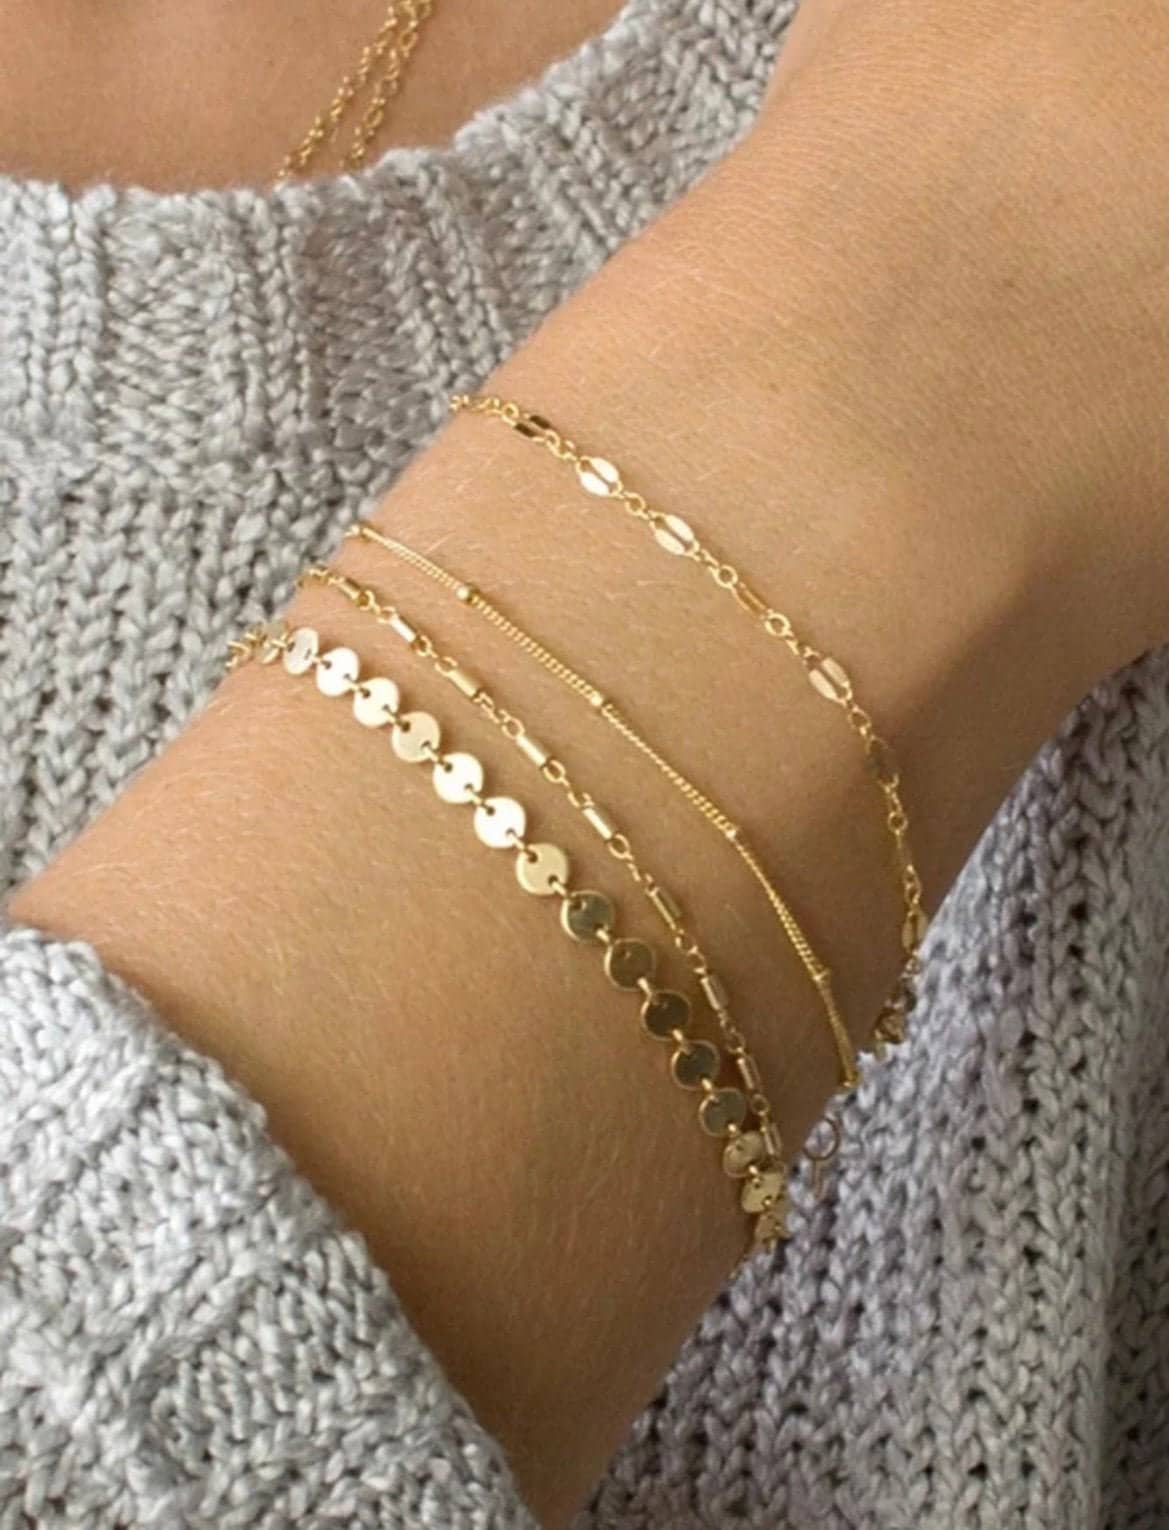 4 Piece Dainty Gold Bracelet Set, Minimalist Gold Bracelet Set, Simple Gold Bracelets, Classic Gold Bracelets, Popular Gold Bracelet Gift